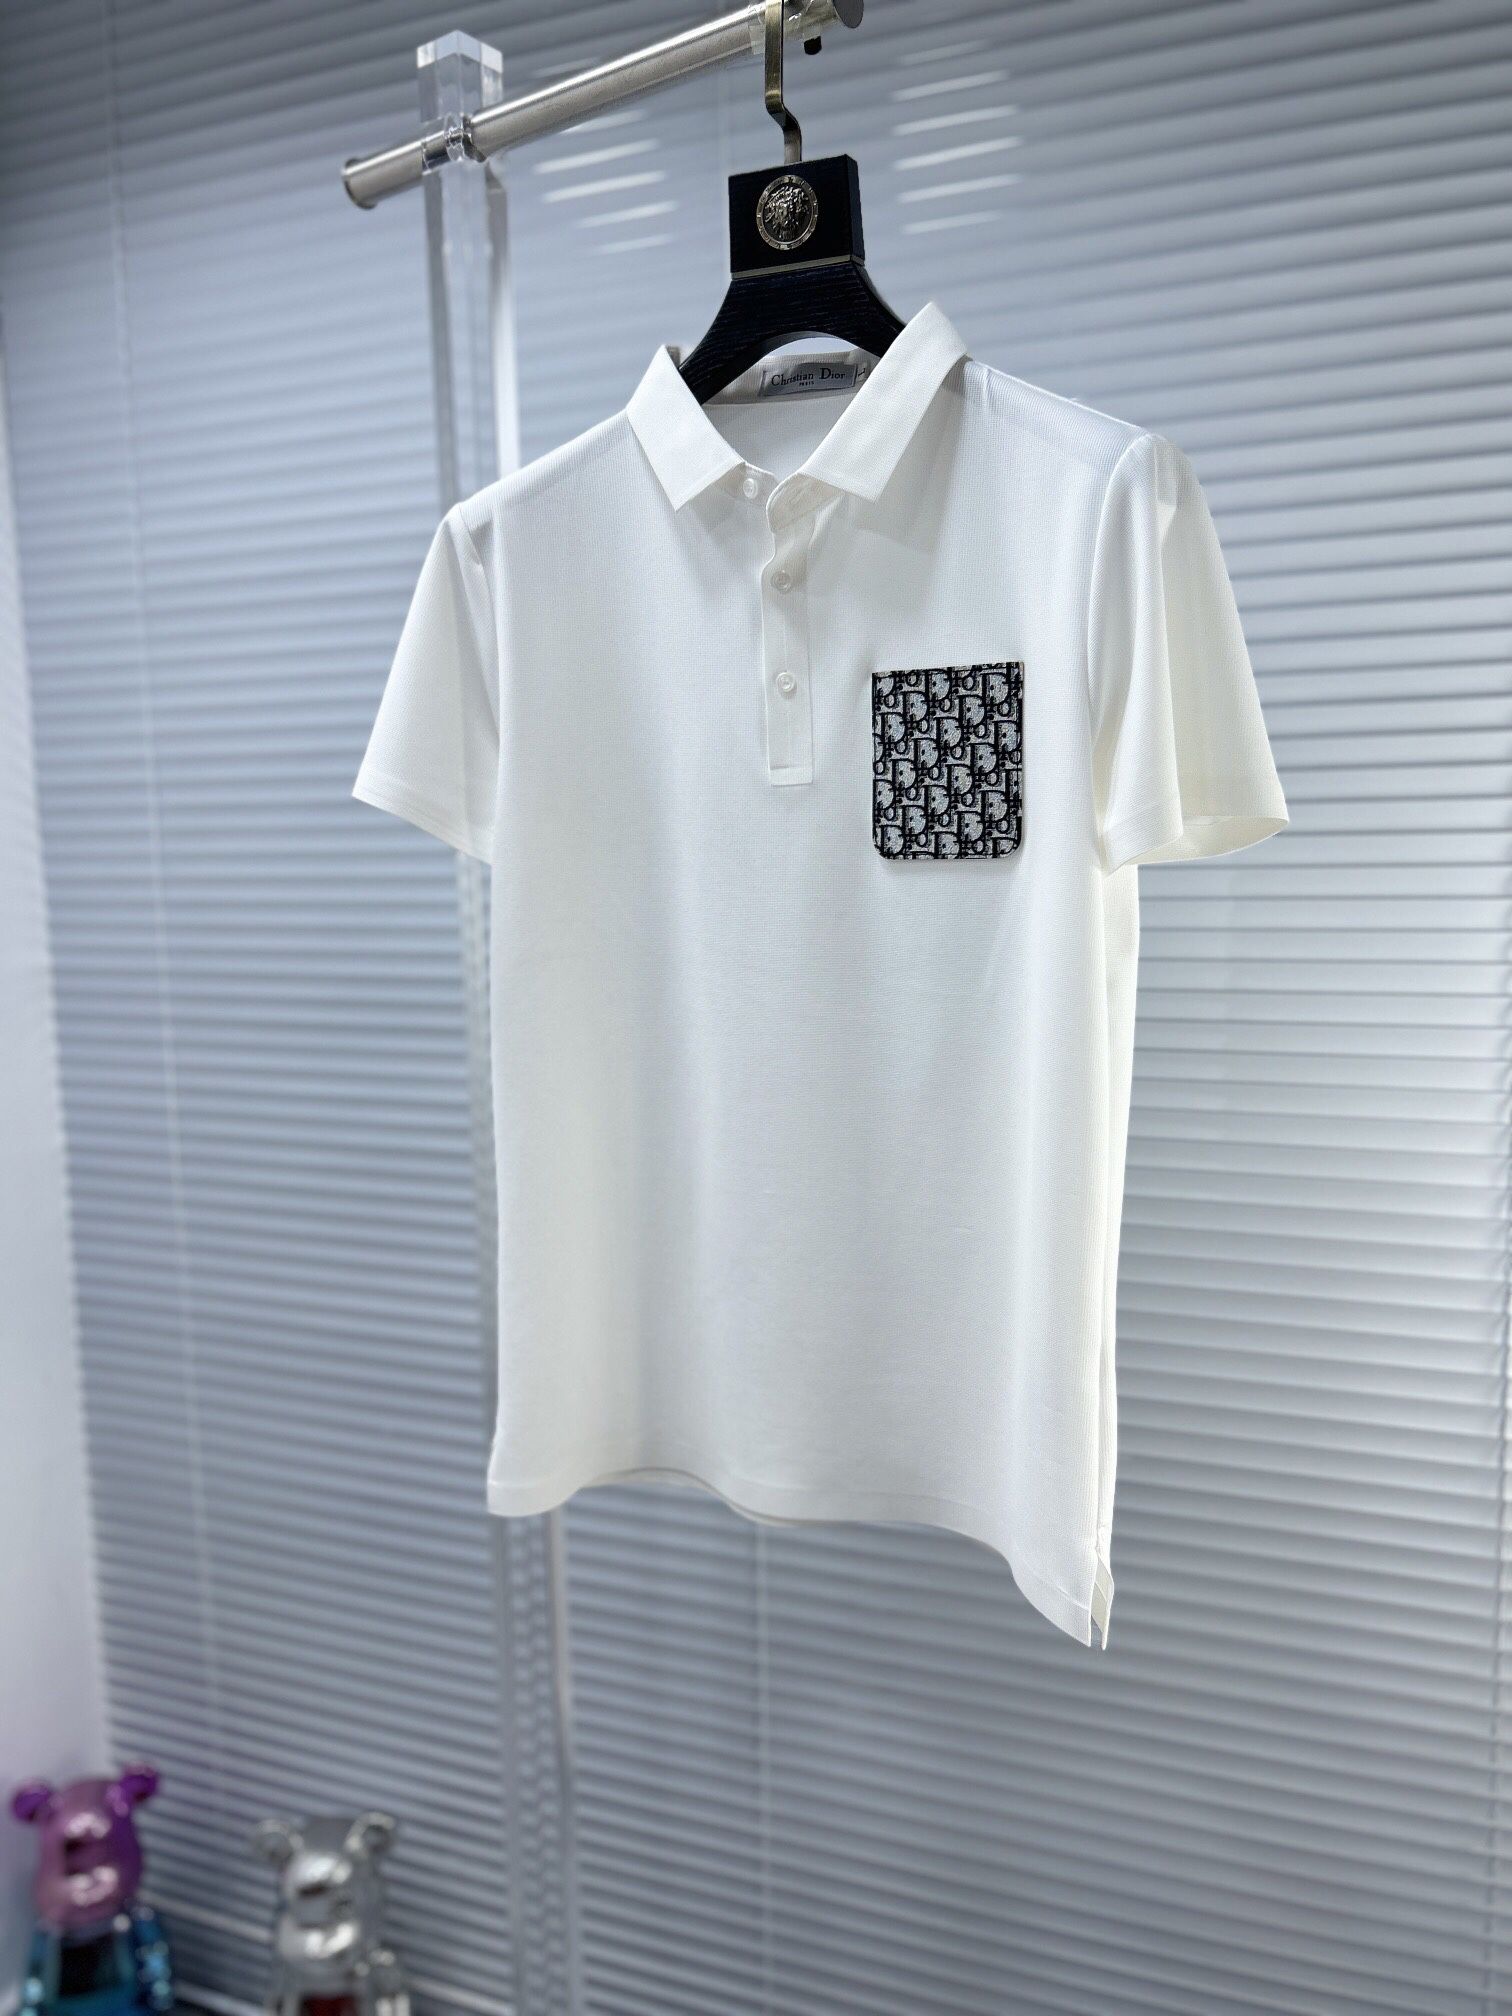 Dior White Polo Shirt New 